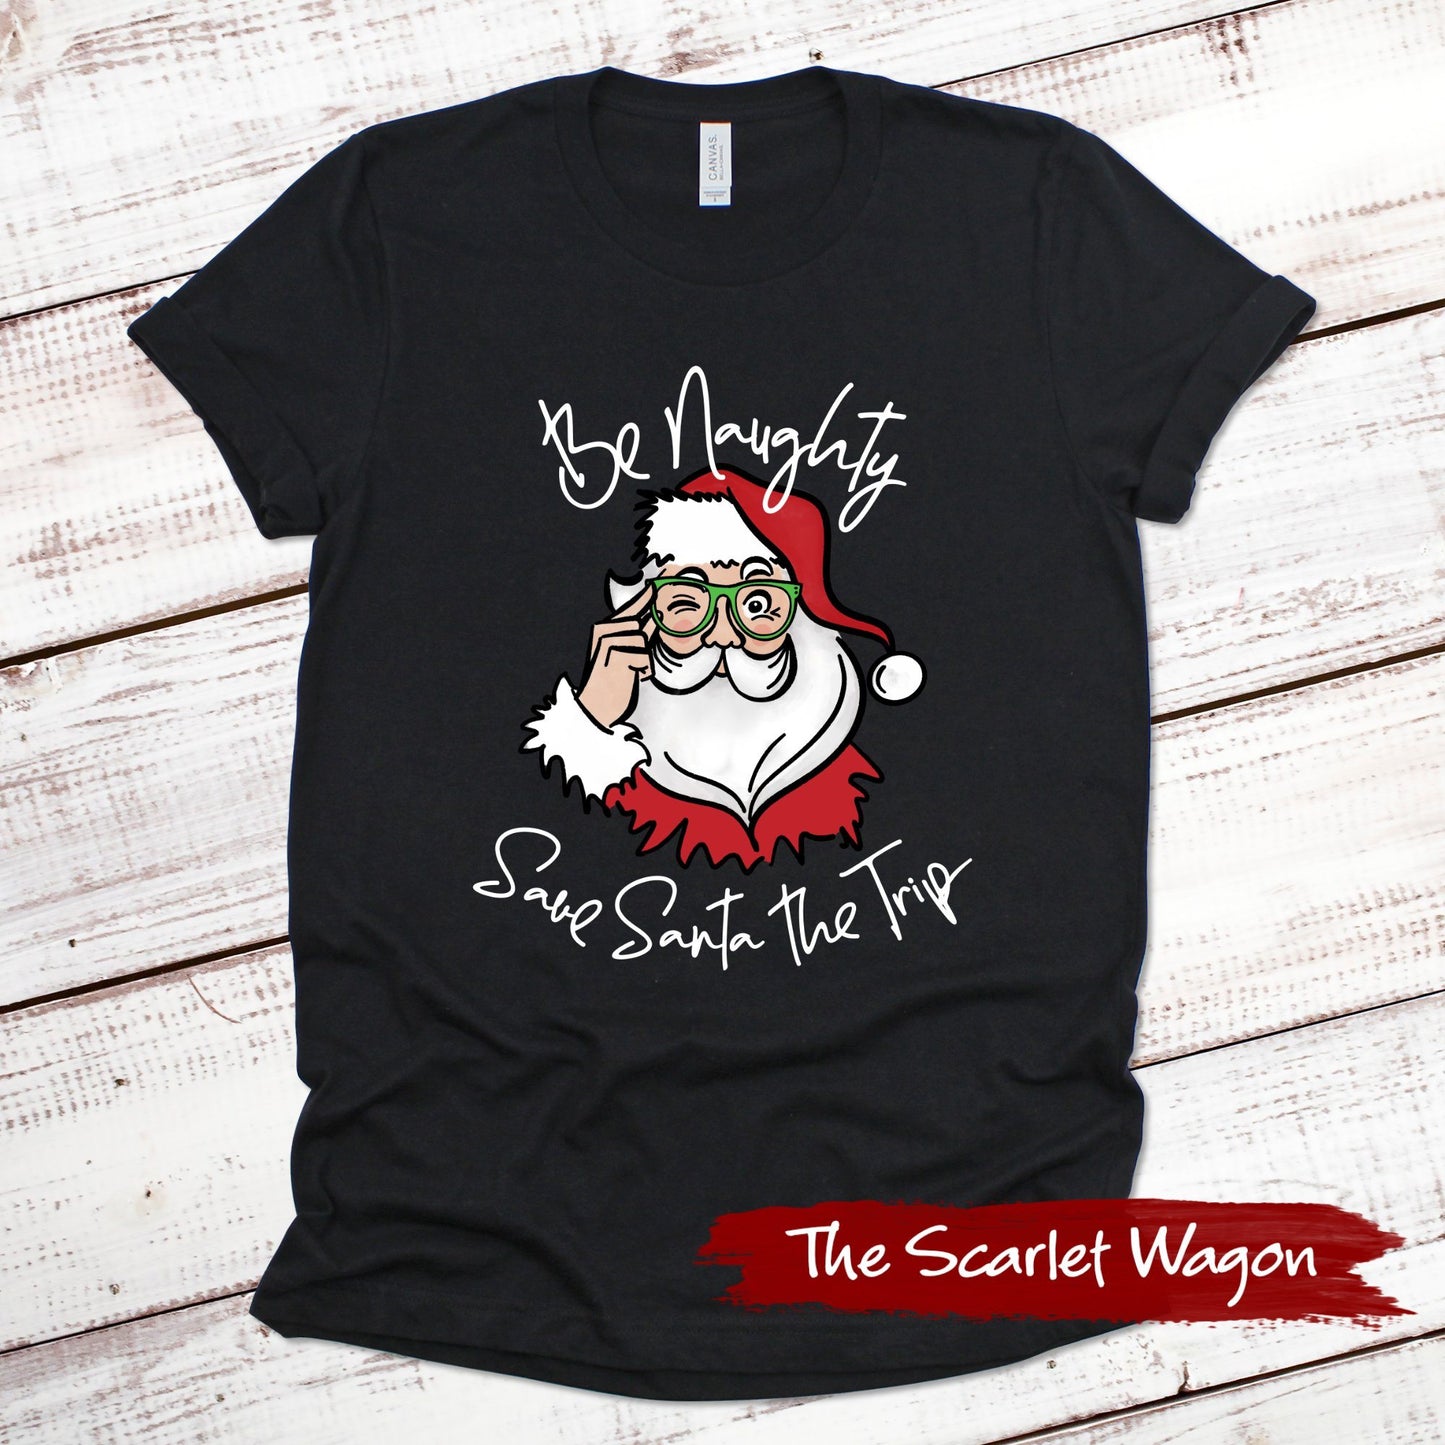 Be Naughty Save Santa the Trip Christmas Shirt Scarlet Wagon Black XS 